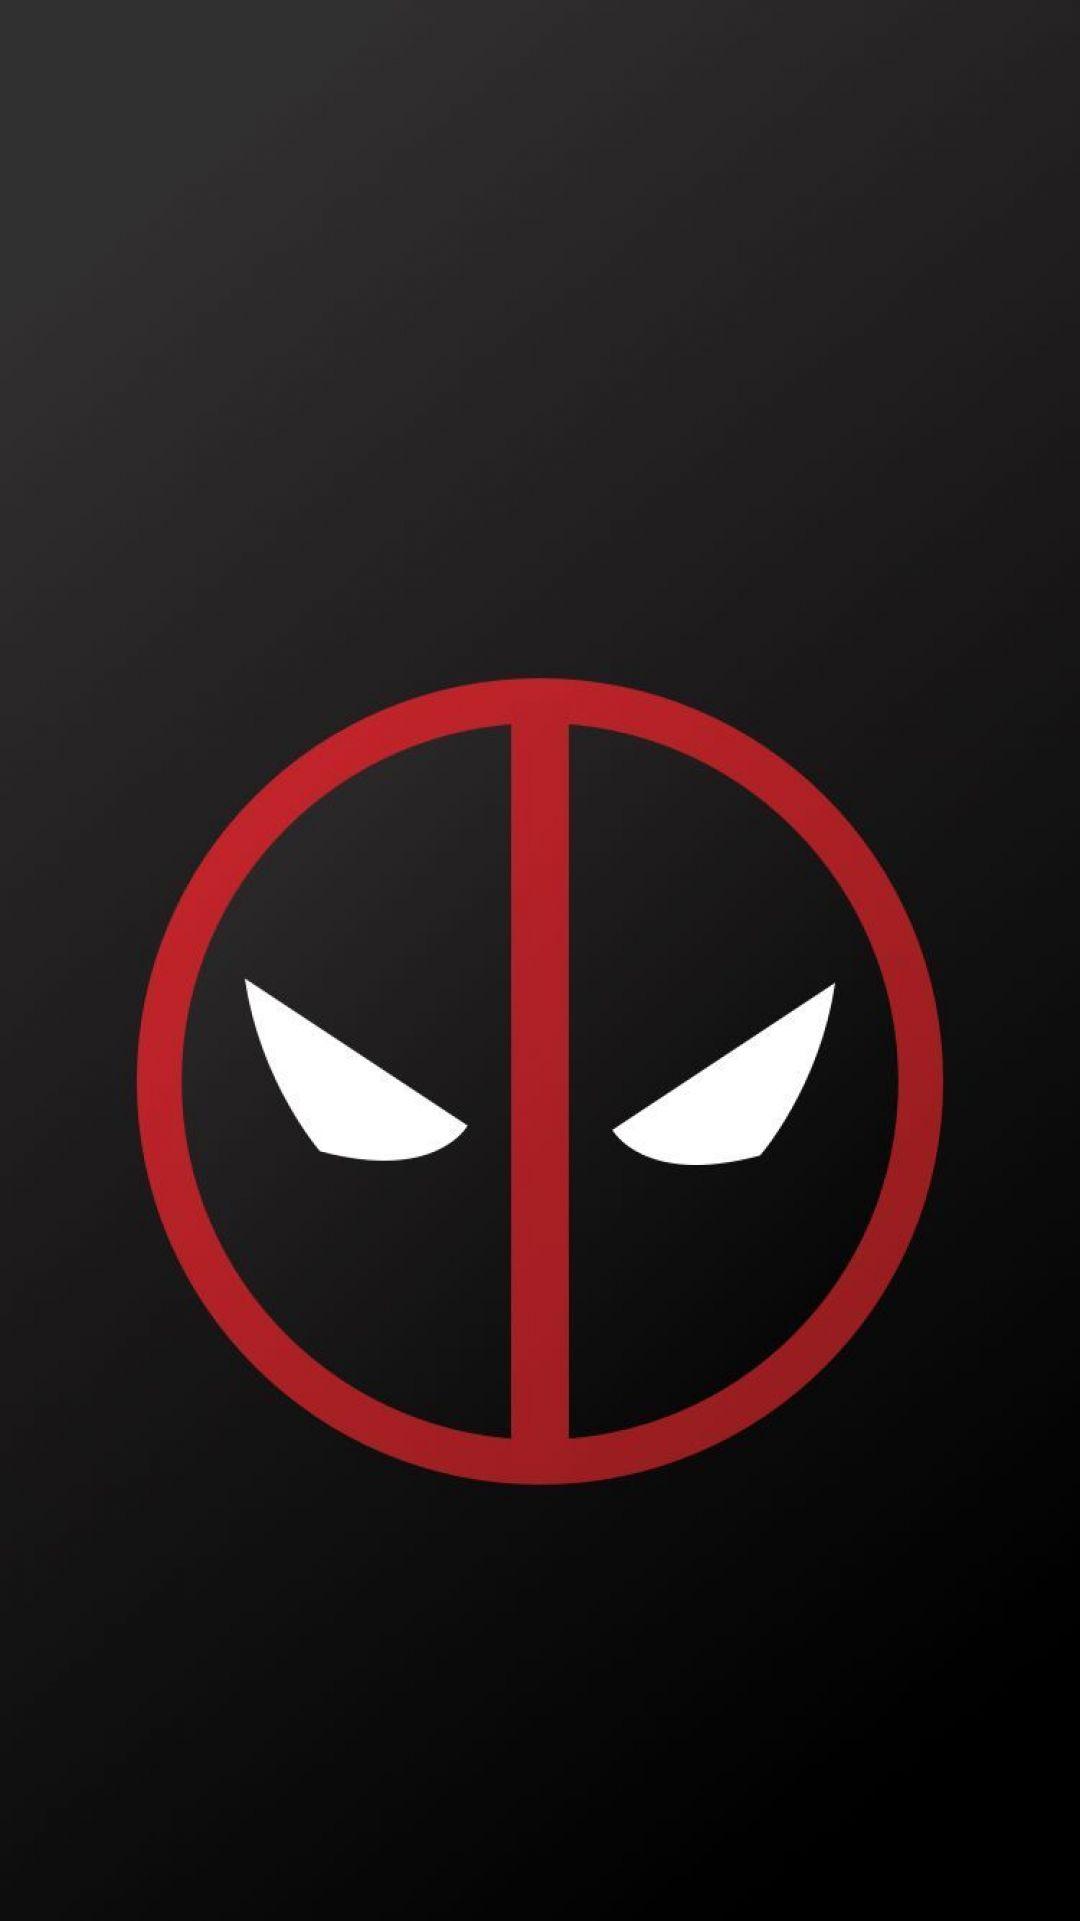 Deadpool Marvel Comic Book, iPhone, Desktop HD Background / Wallpaper (1080p, 4k) (1080x1921) (2020)